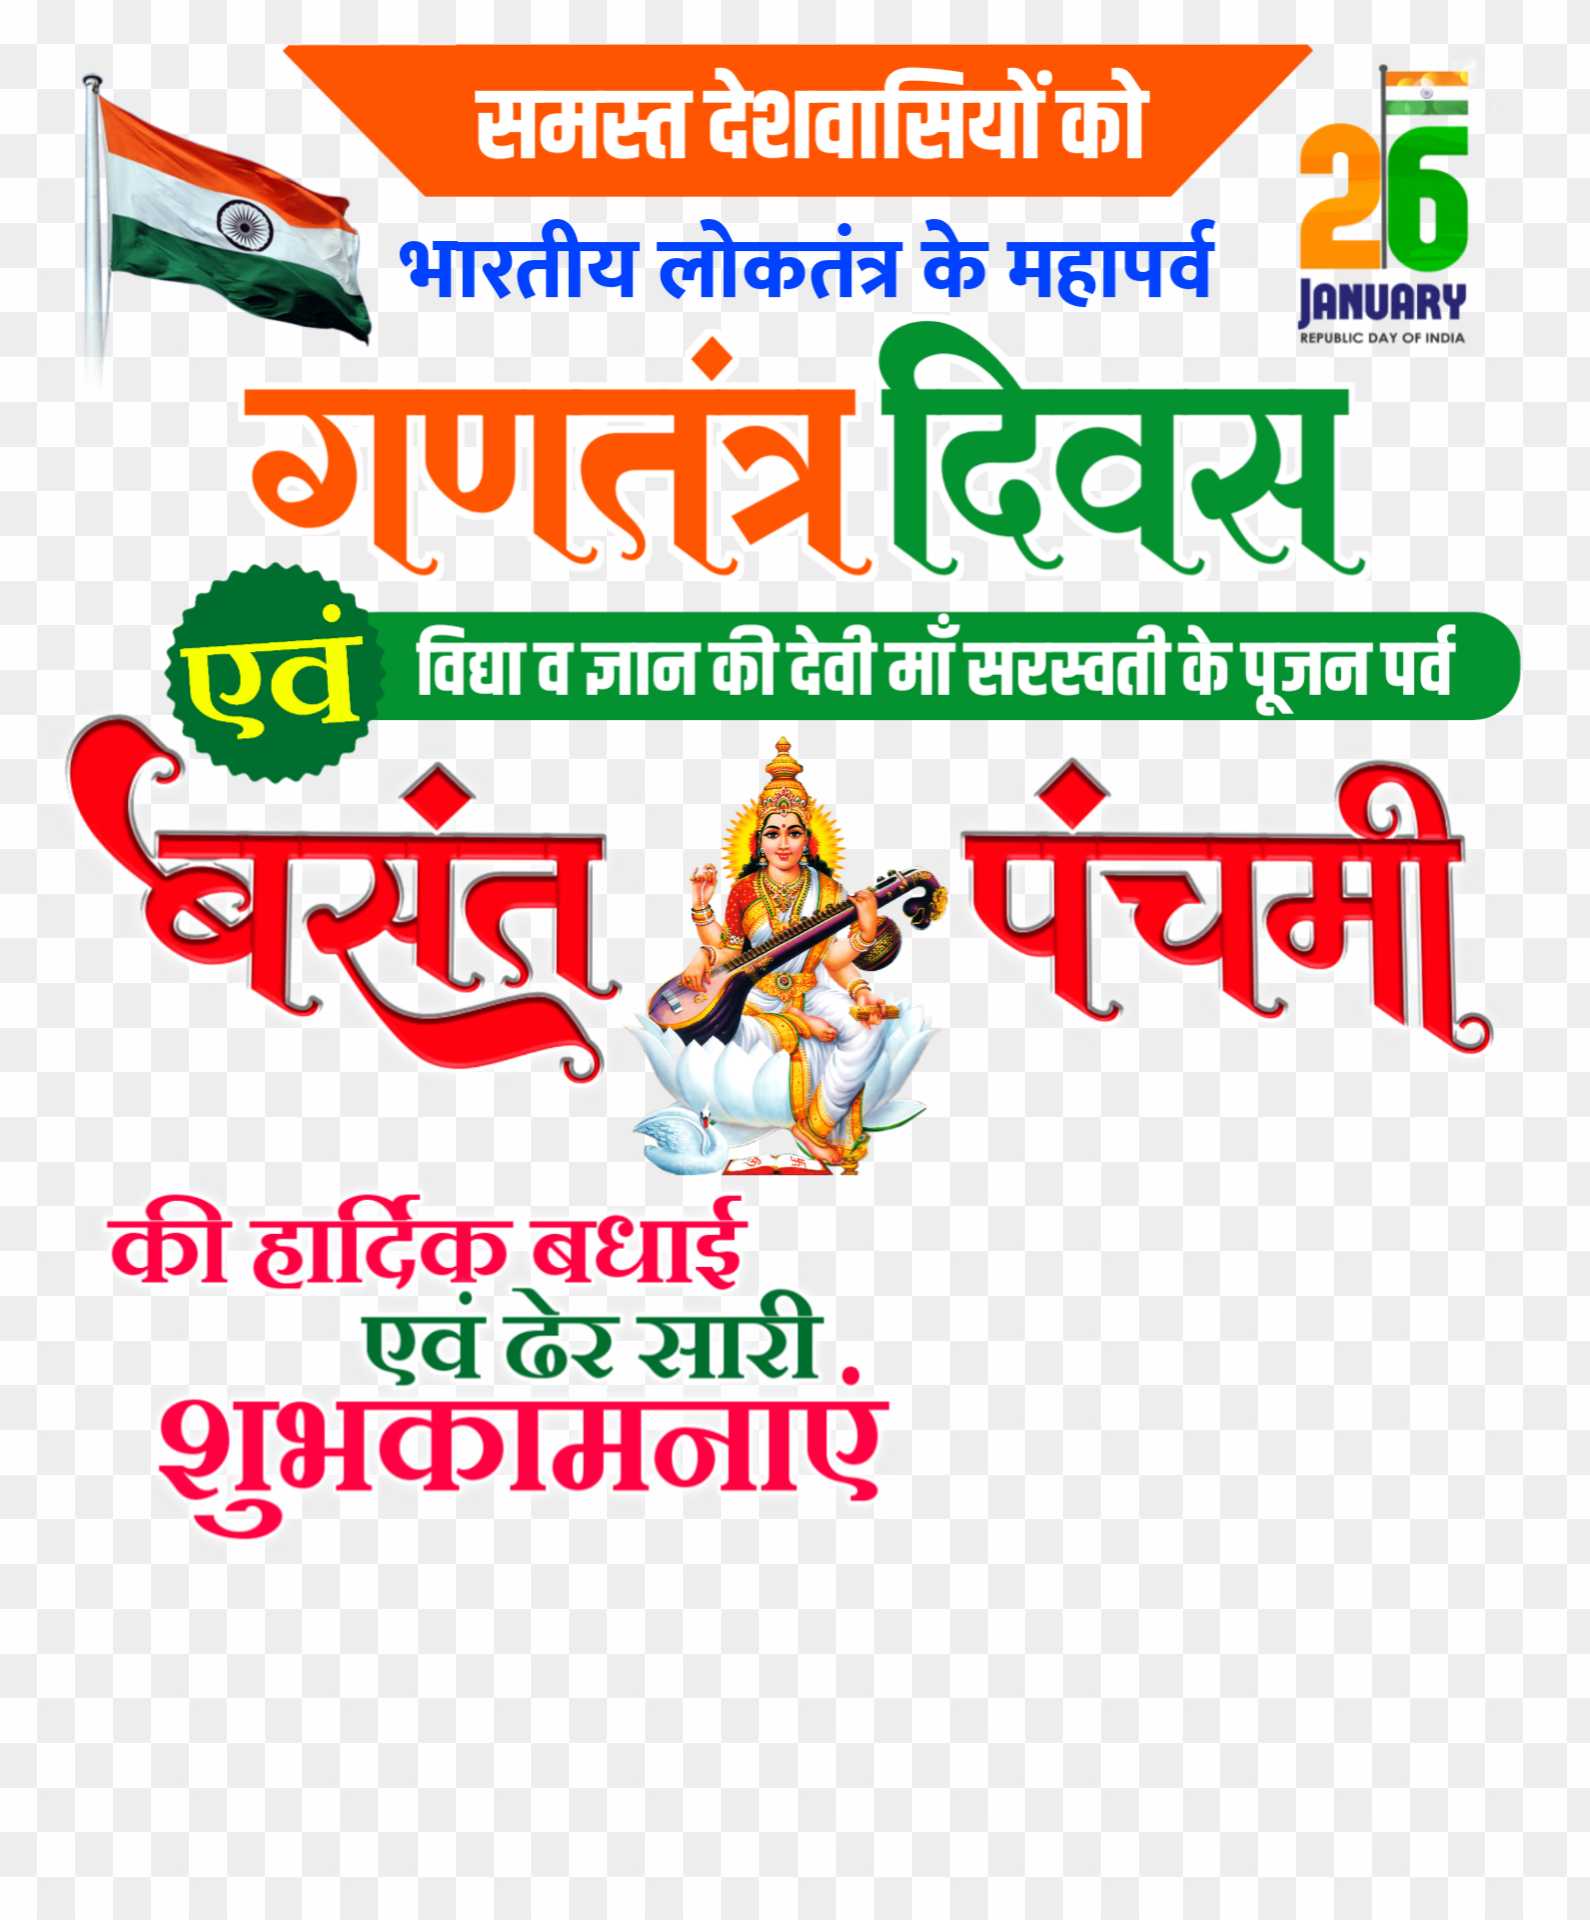 26 January Basant panchmi banner editing PNG download